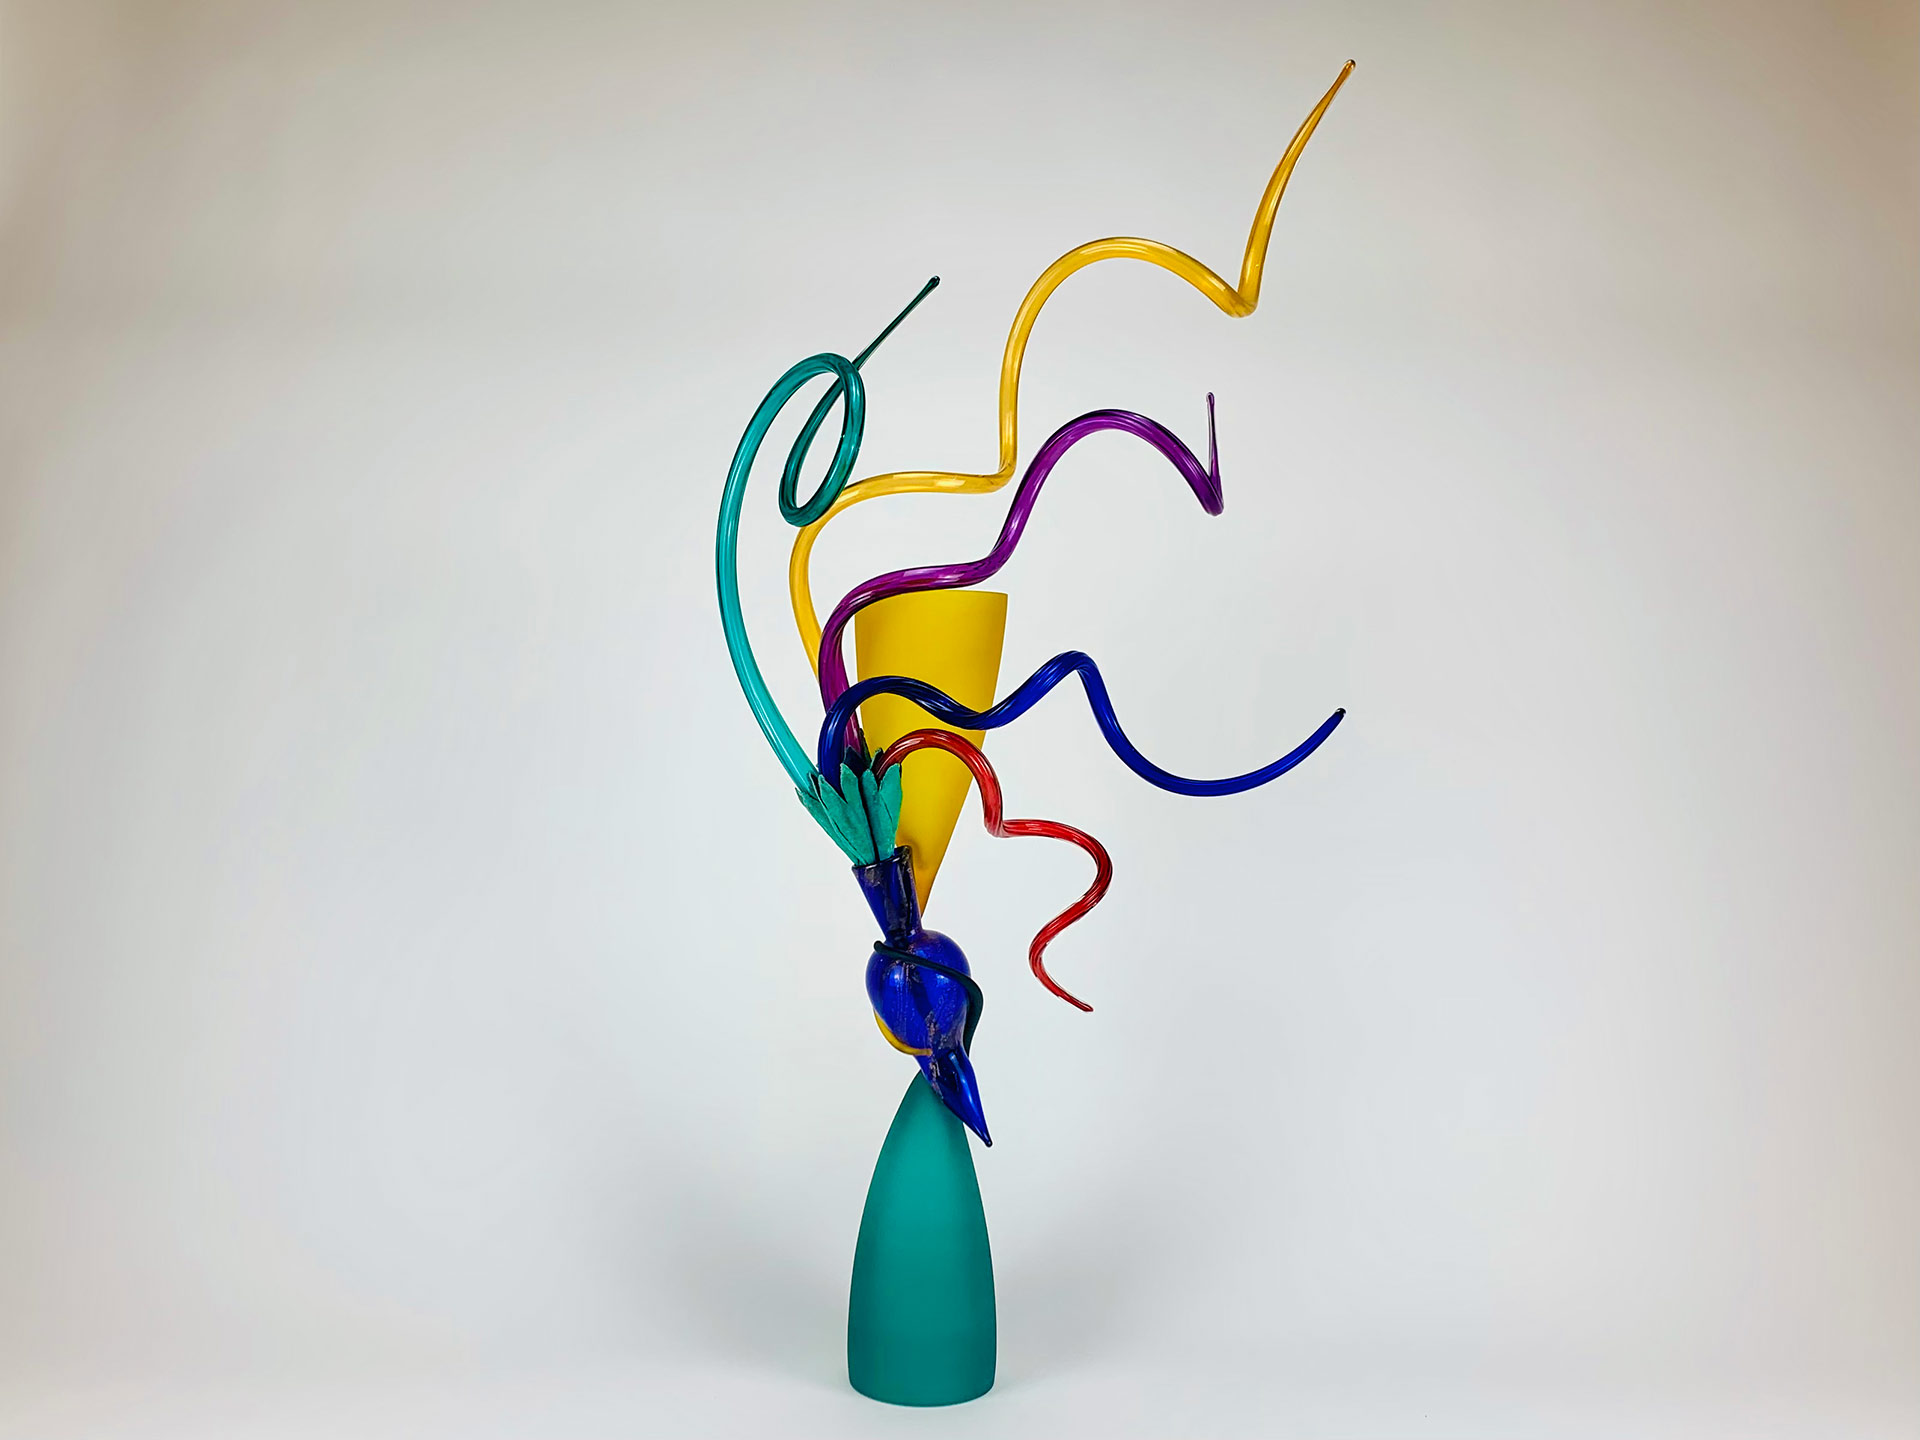 Richard-Royal-Spray-series-Moment-SP04-35-teal-gold-purple-multi-color-blown-glass-sculpture